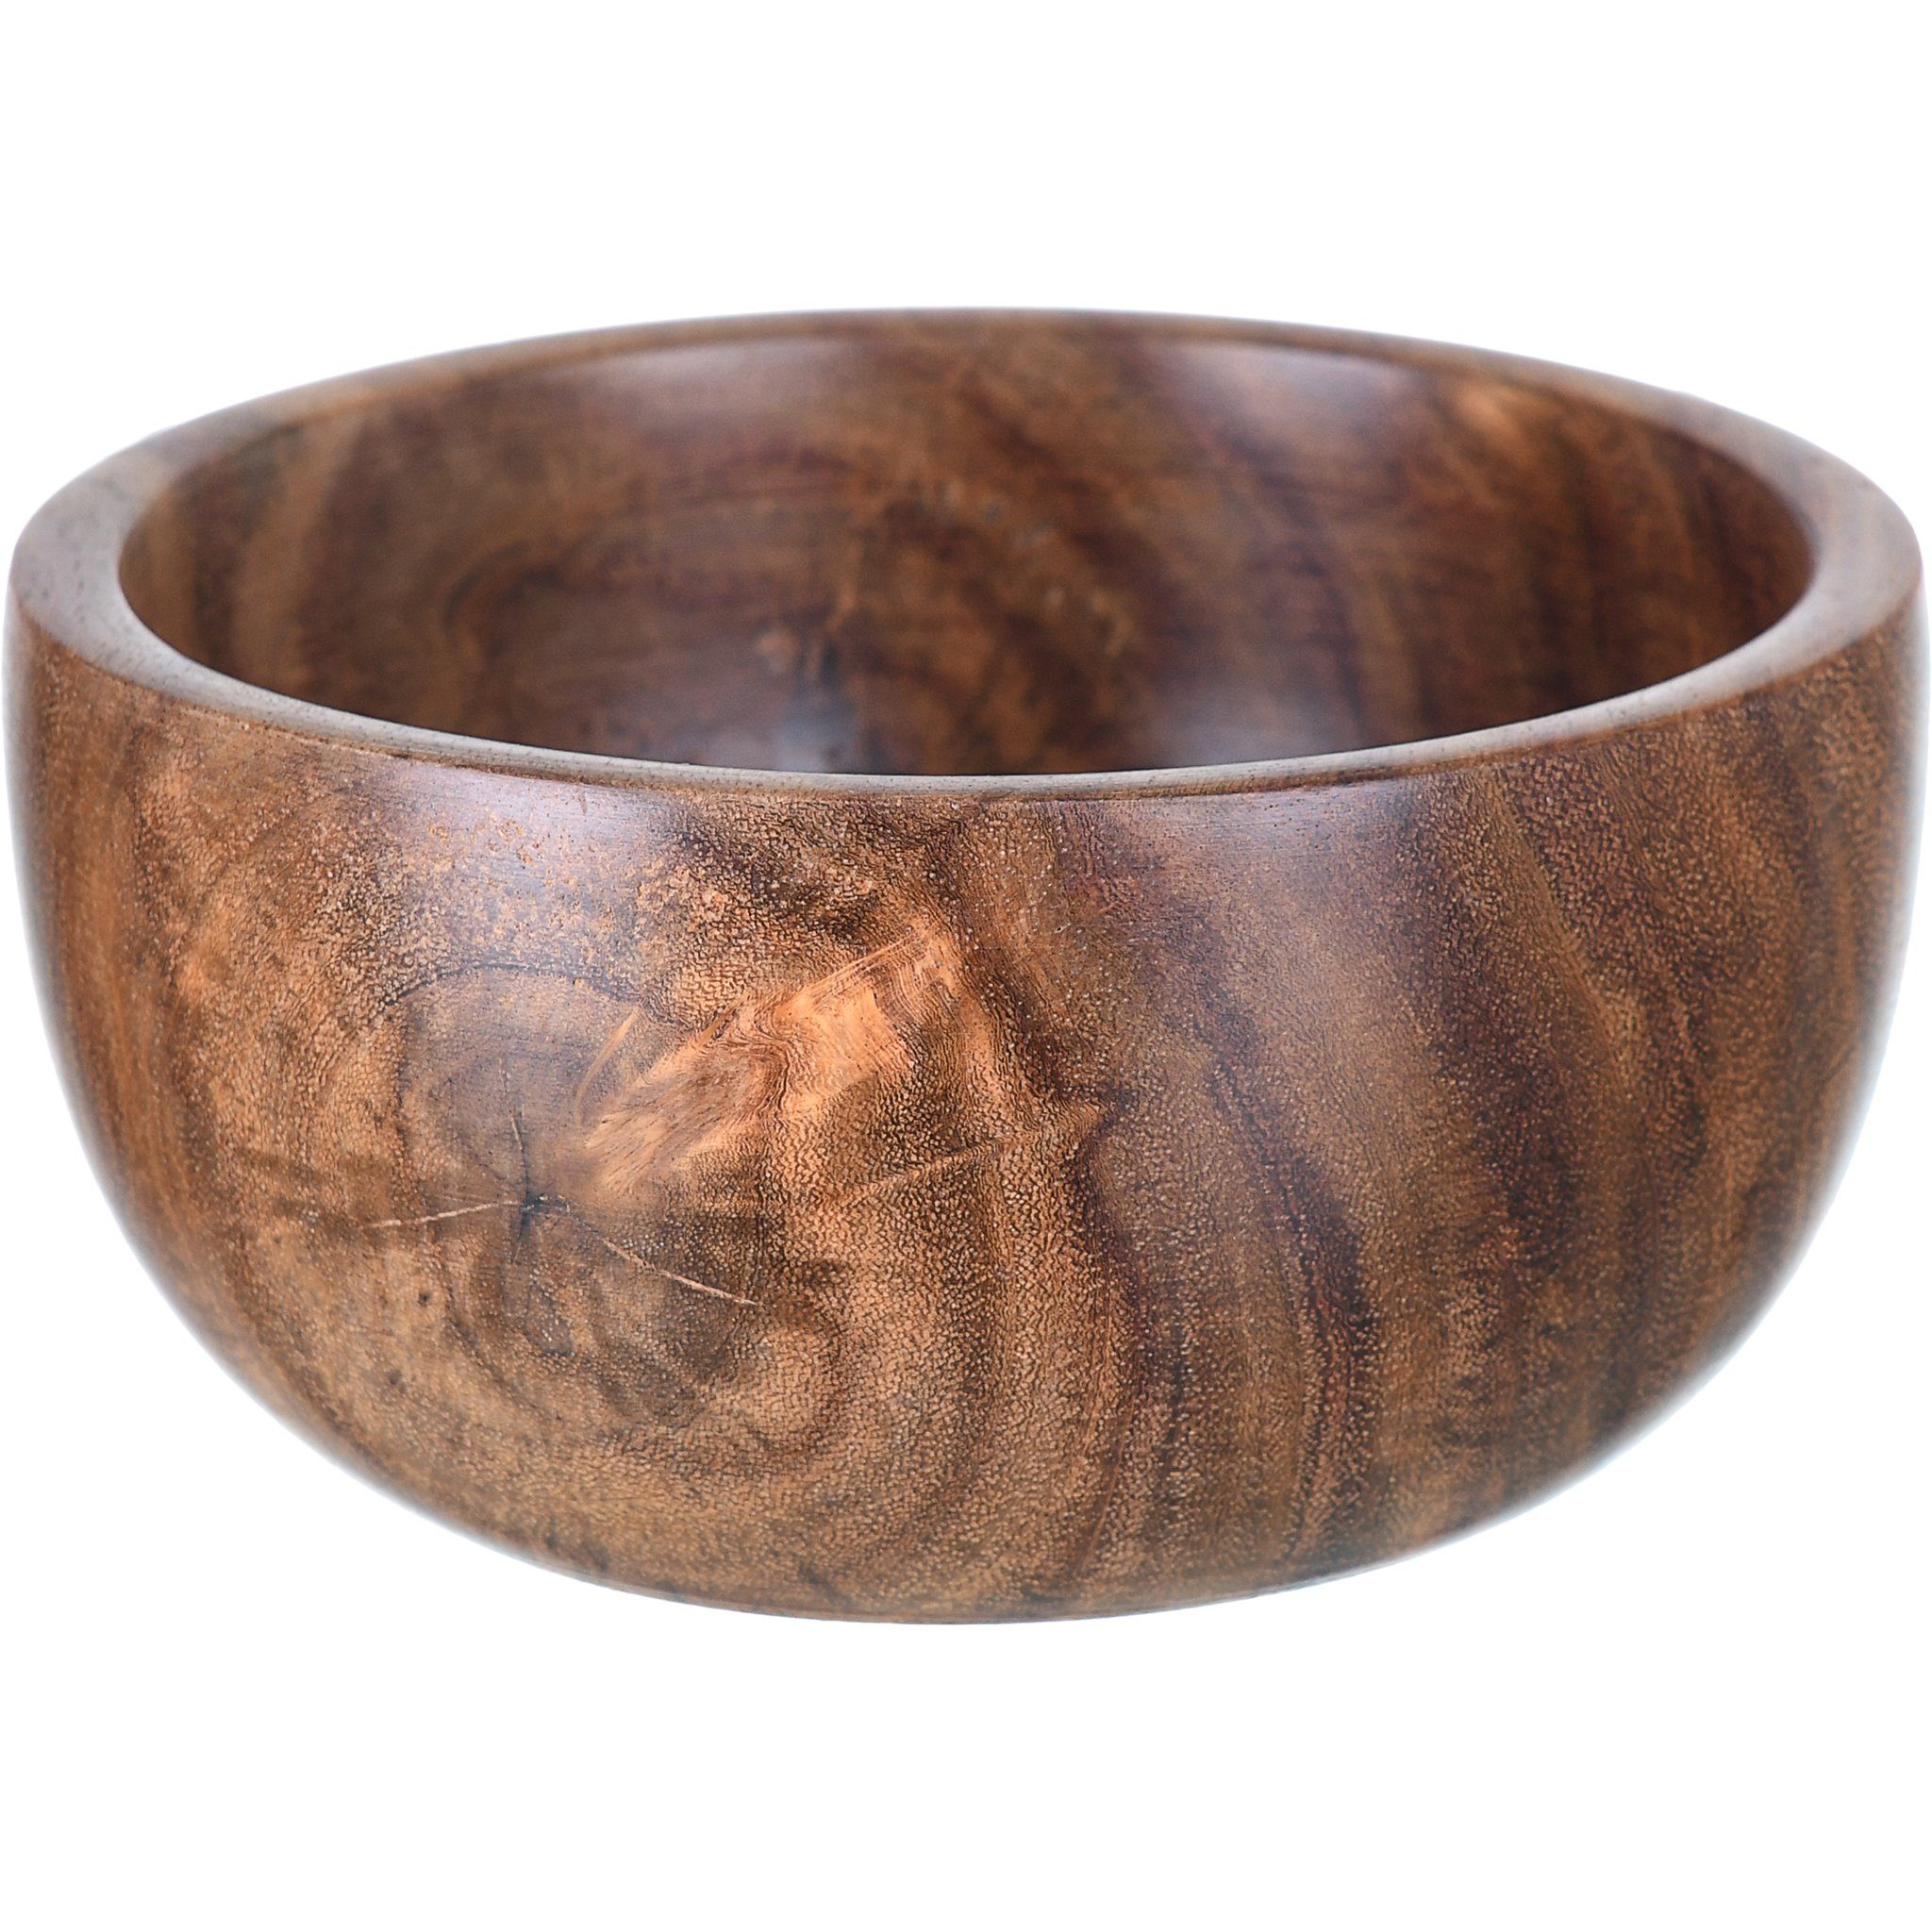 Medium Round Wooden Bowl - 14cm - 5900016